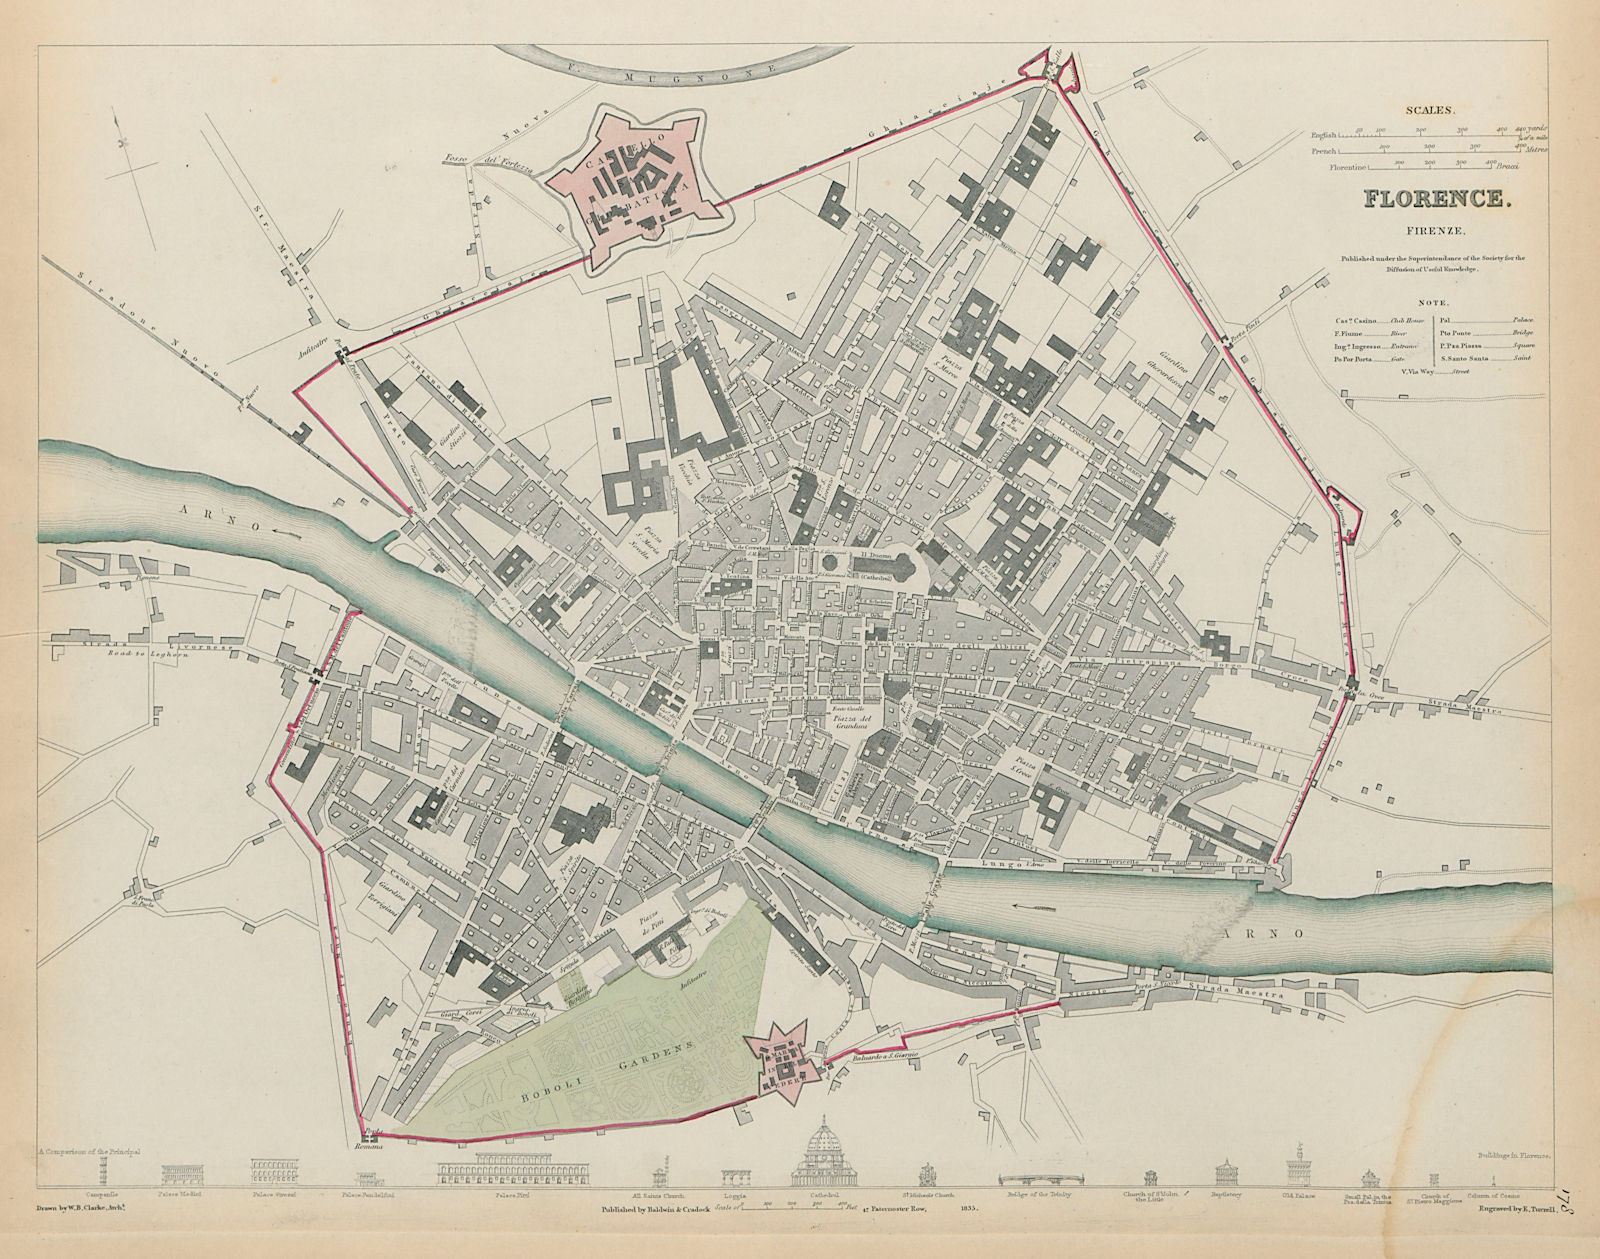 FLORENCE FIRENZE Antique city town map plan Key buildings profiles SDUK 1844